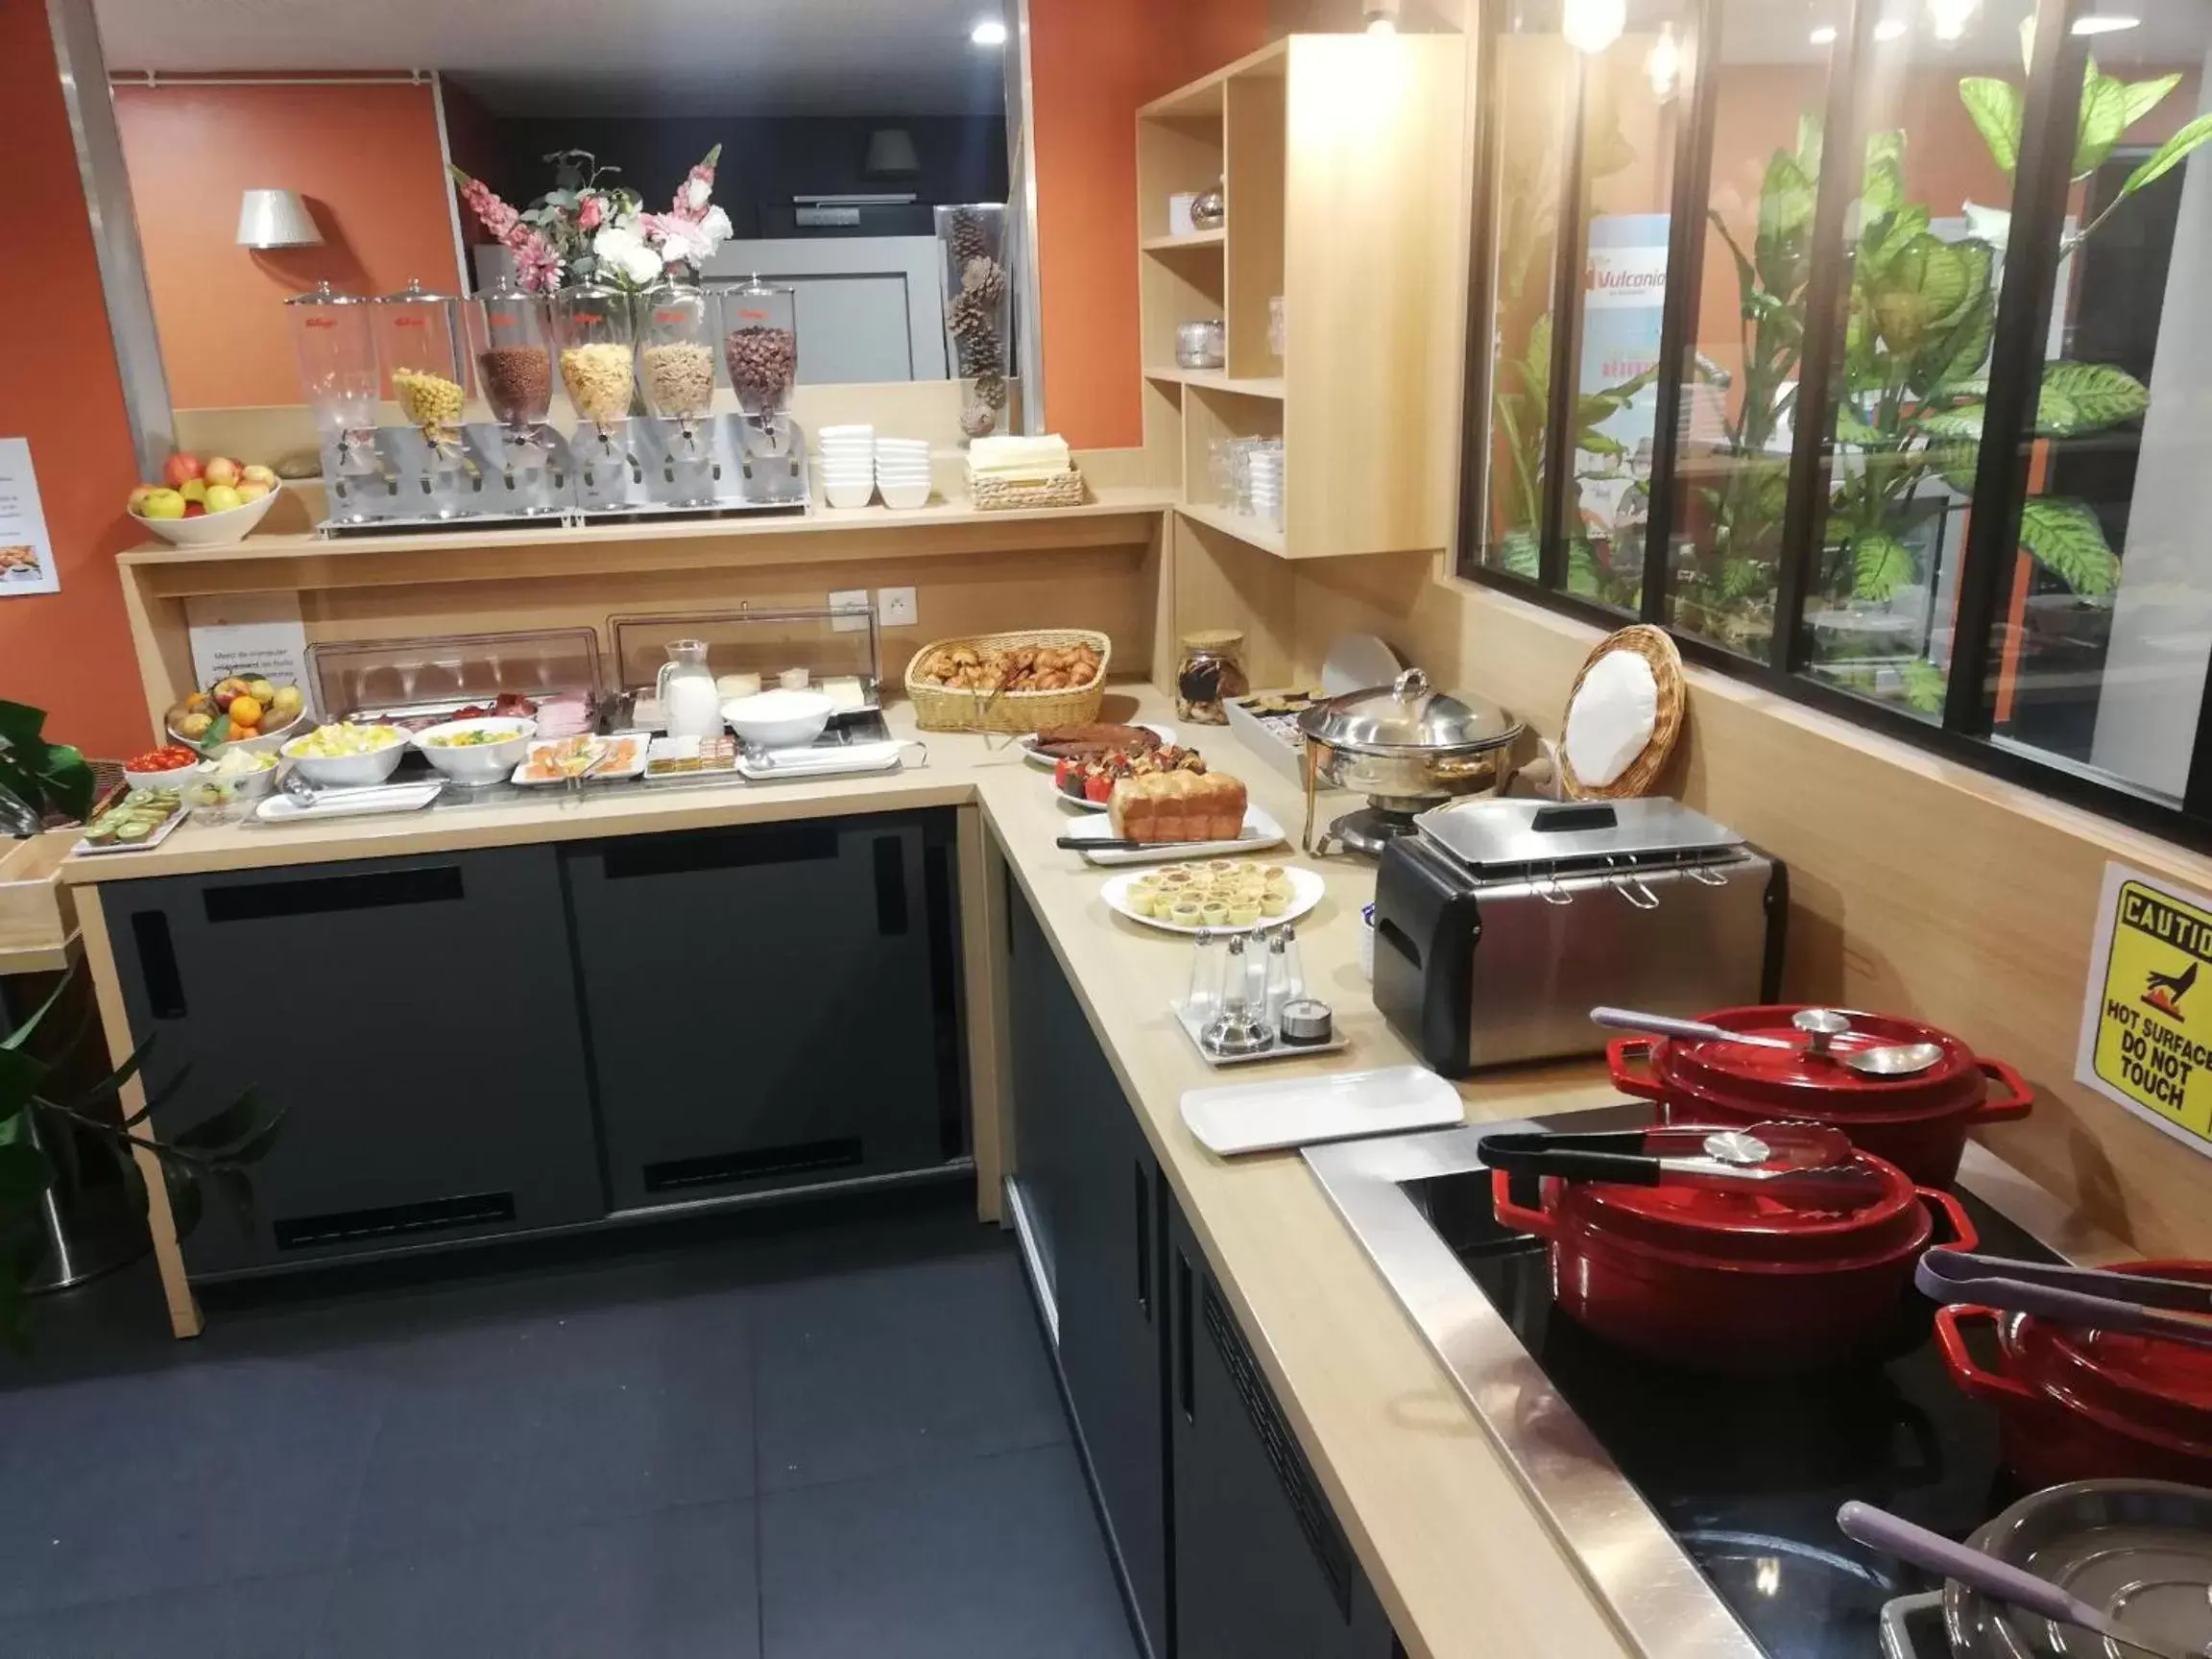 Buffet breakfast in Apparthotel Privilodges Carré de Jaude